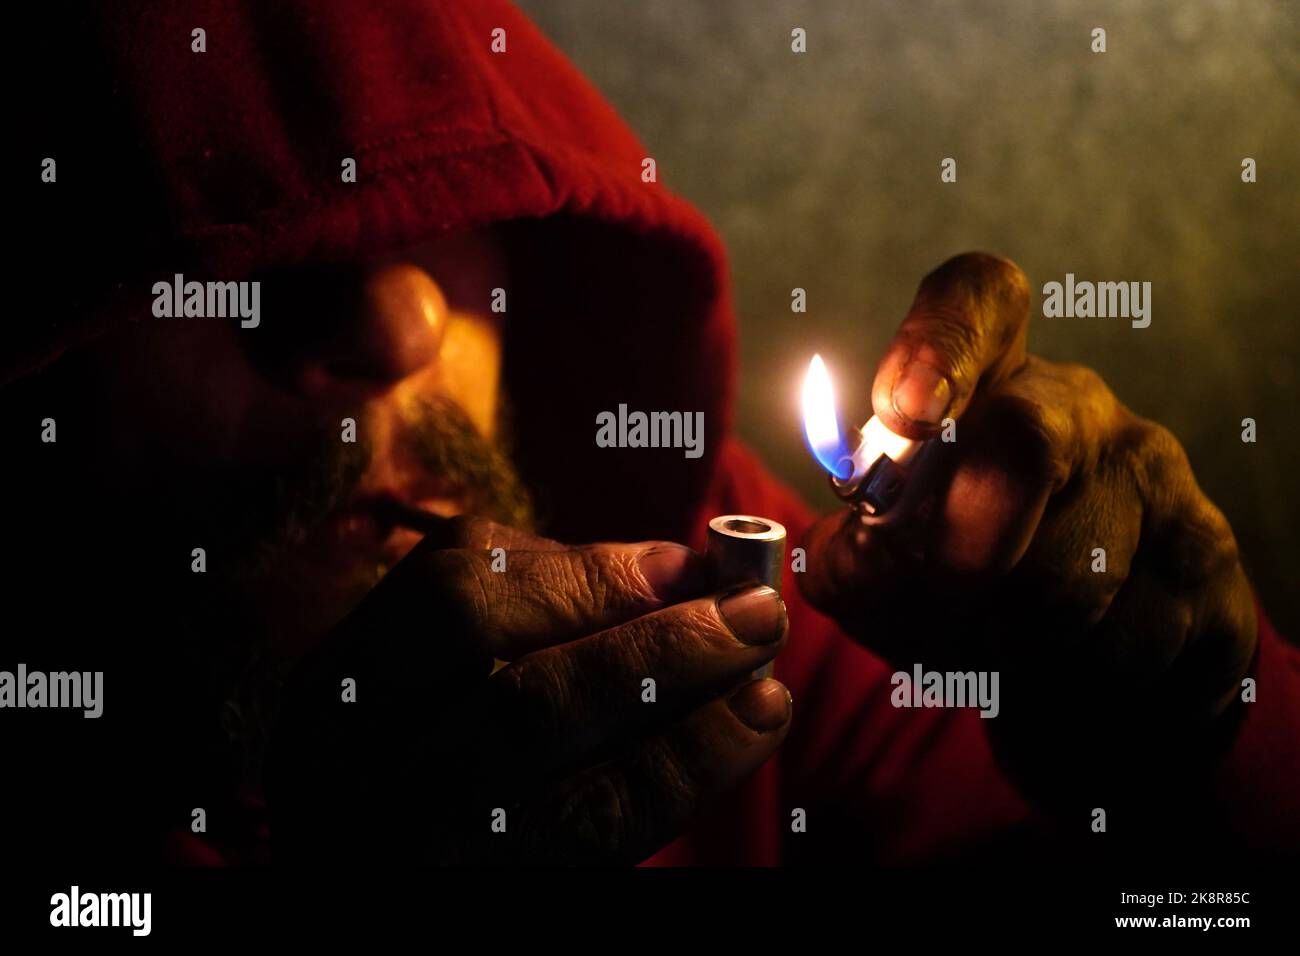 Pipa de droga fotografías e imágenes de alta resolución - Alamy